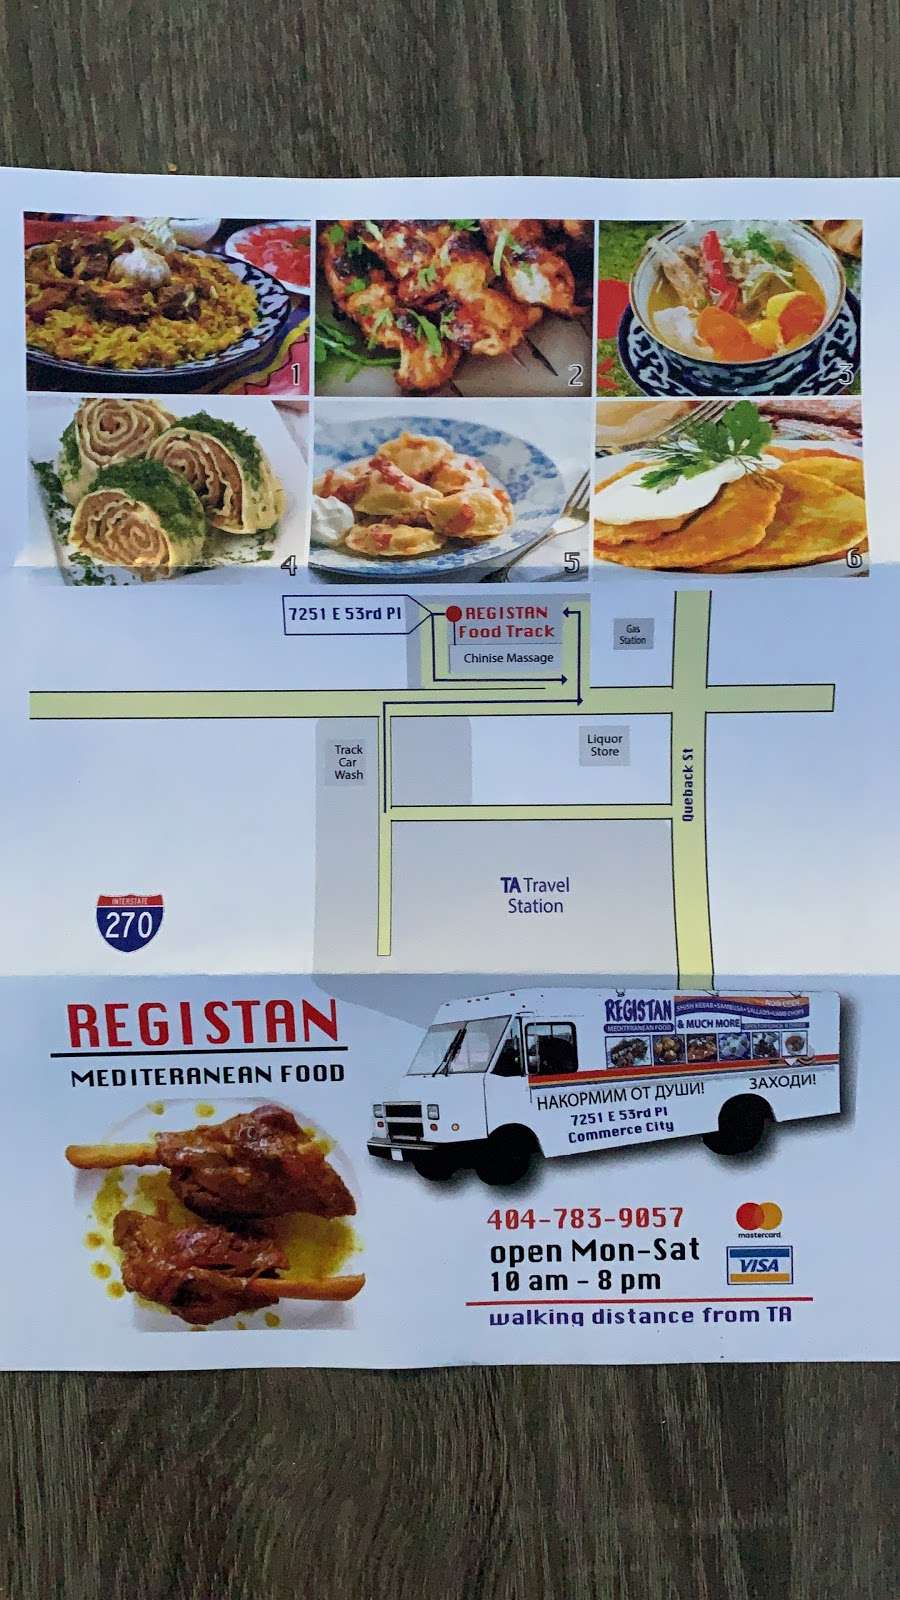 Registan Food Truck | 7251 E 53rd Pl, Commerce City, CO 80022 | Phone: (404) 783-9057